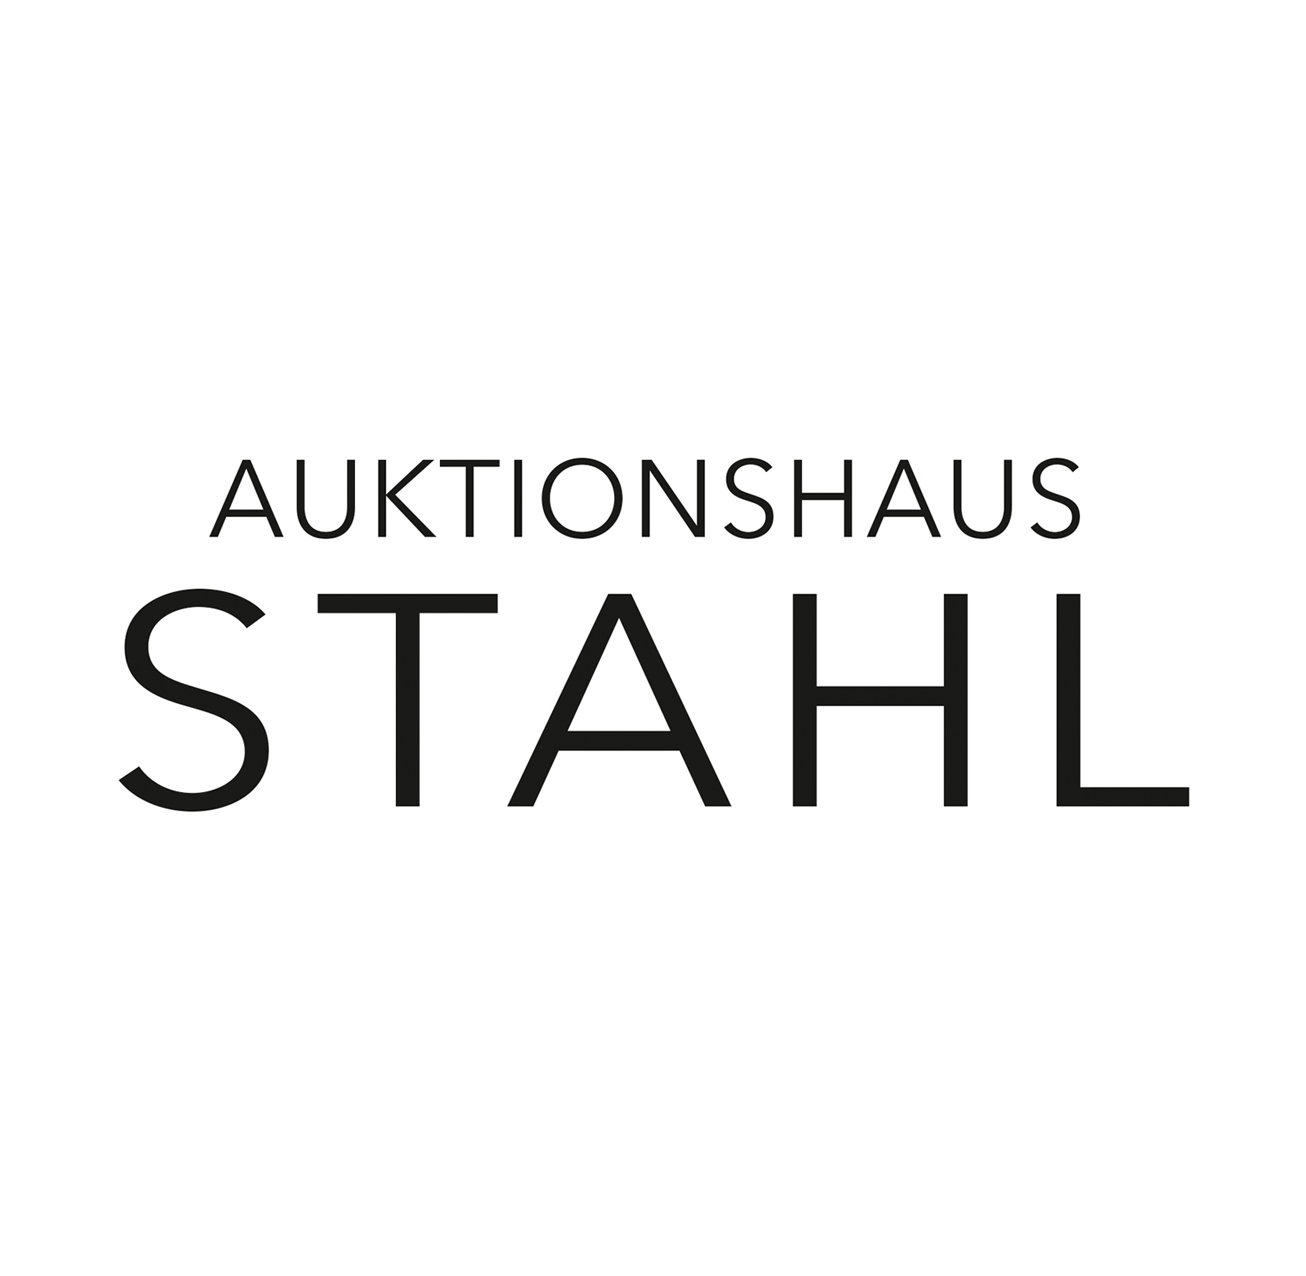 Auktionshaus Stahl GmbH & Co KG